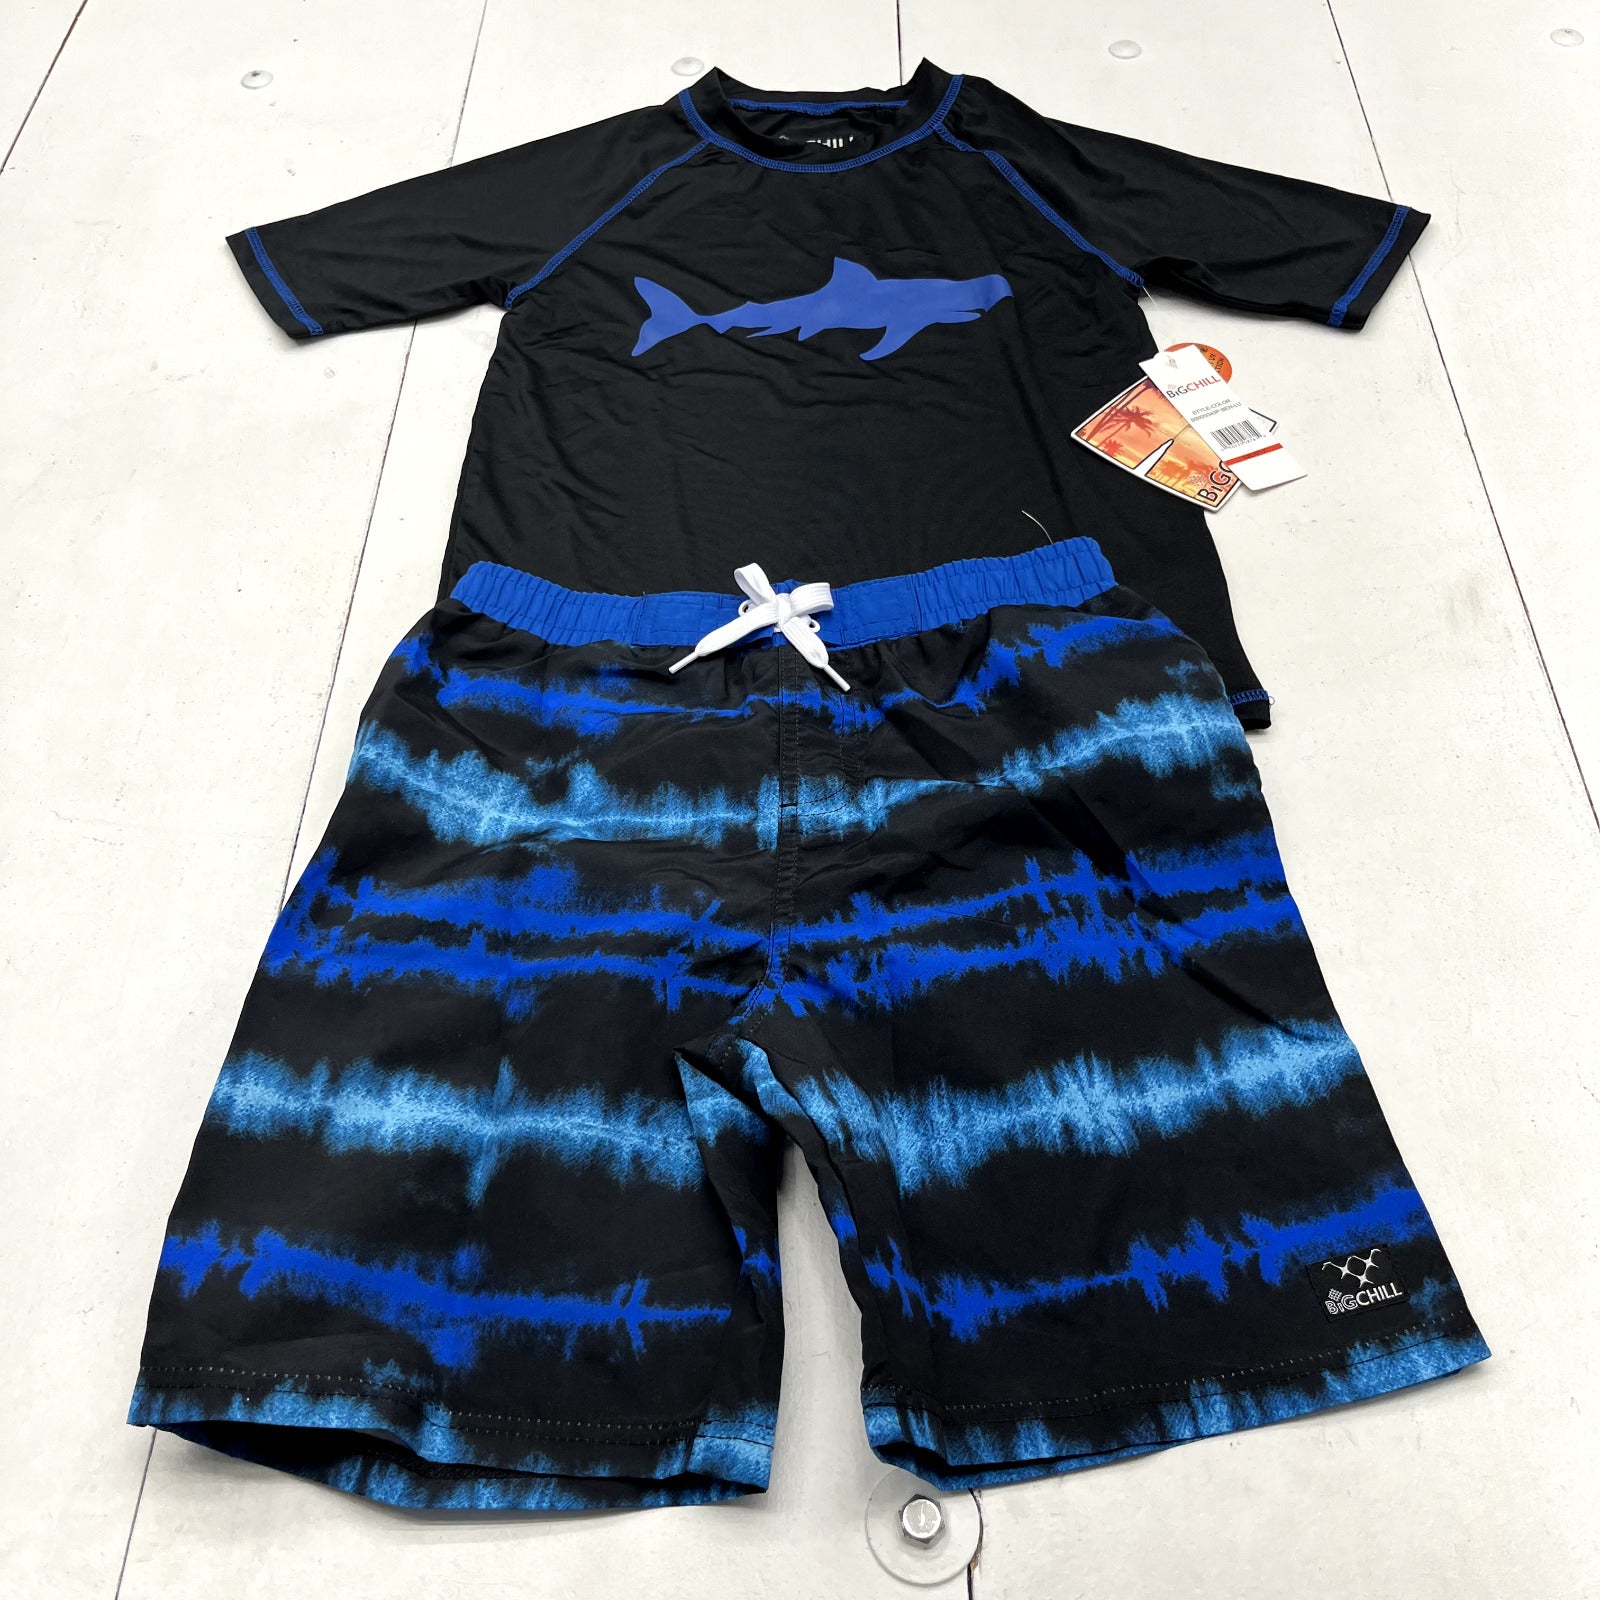 Big Chill Black & Blue Shark Print 2 Piece Swim Set Boys Size 10/12